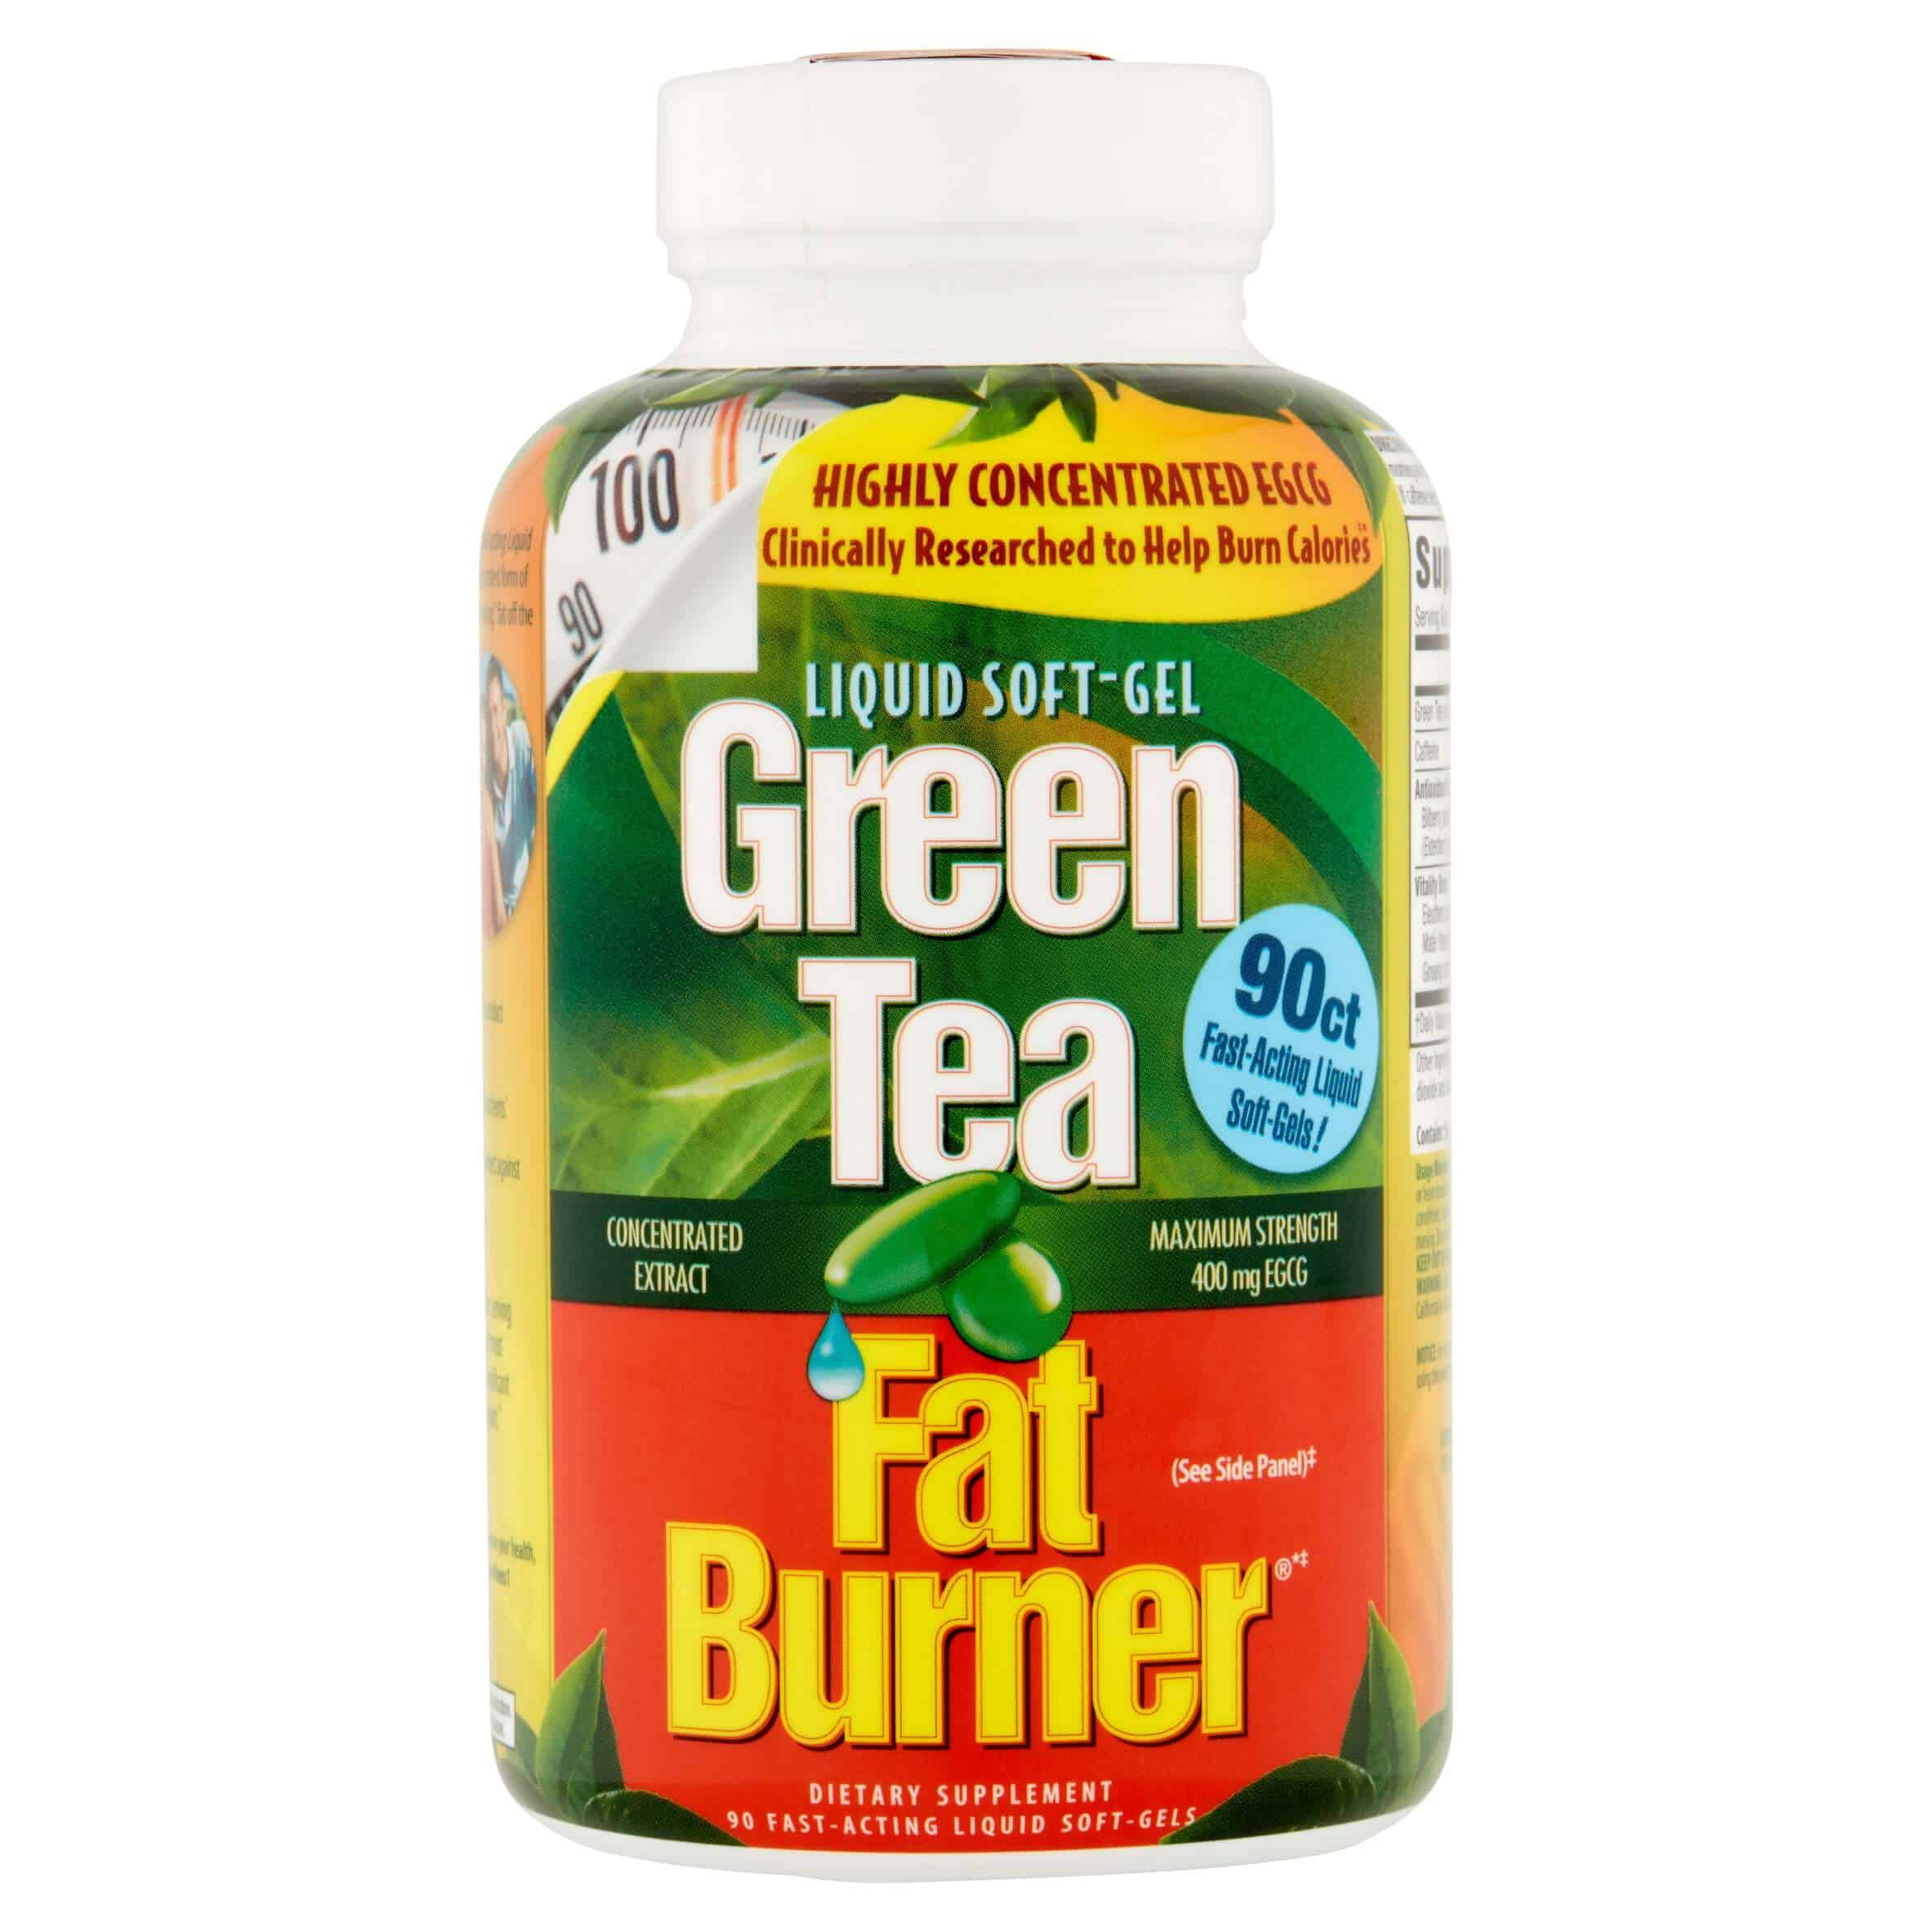 Green Tea Fat Burner Review (UPDATE: 2022)